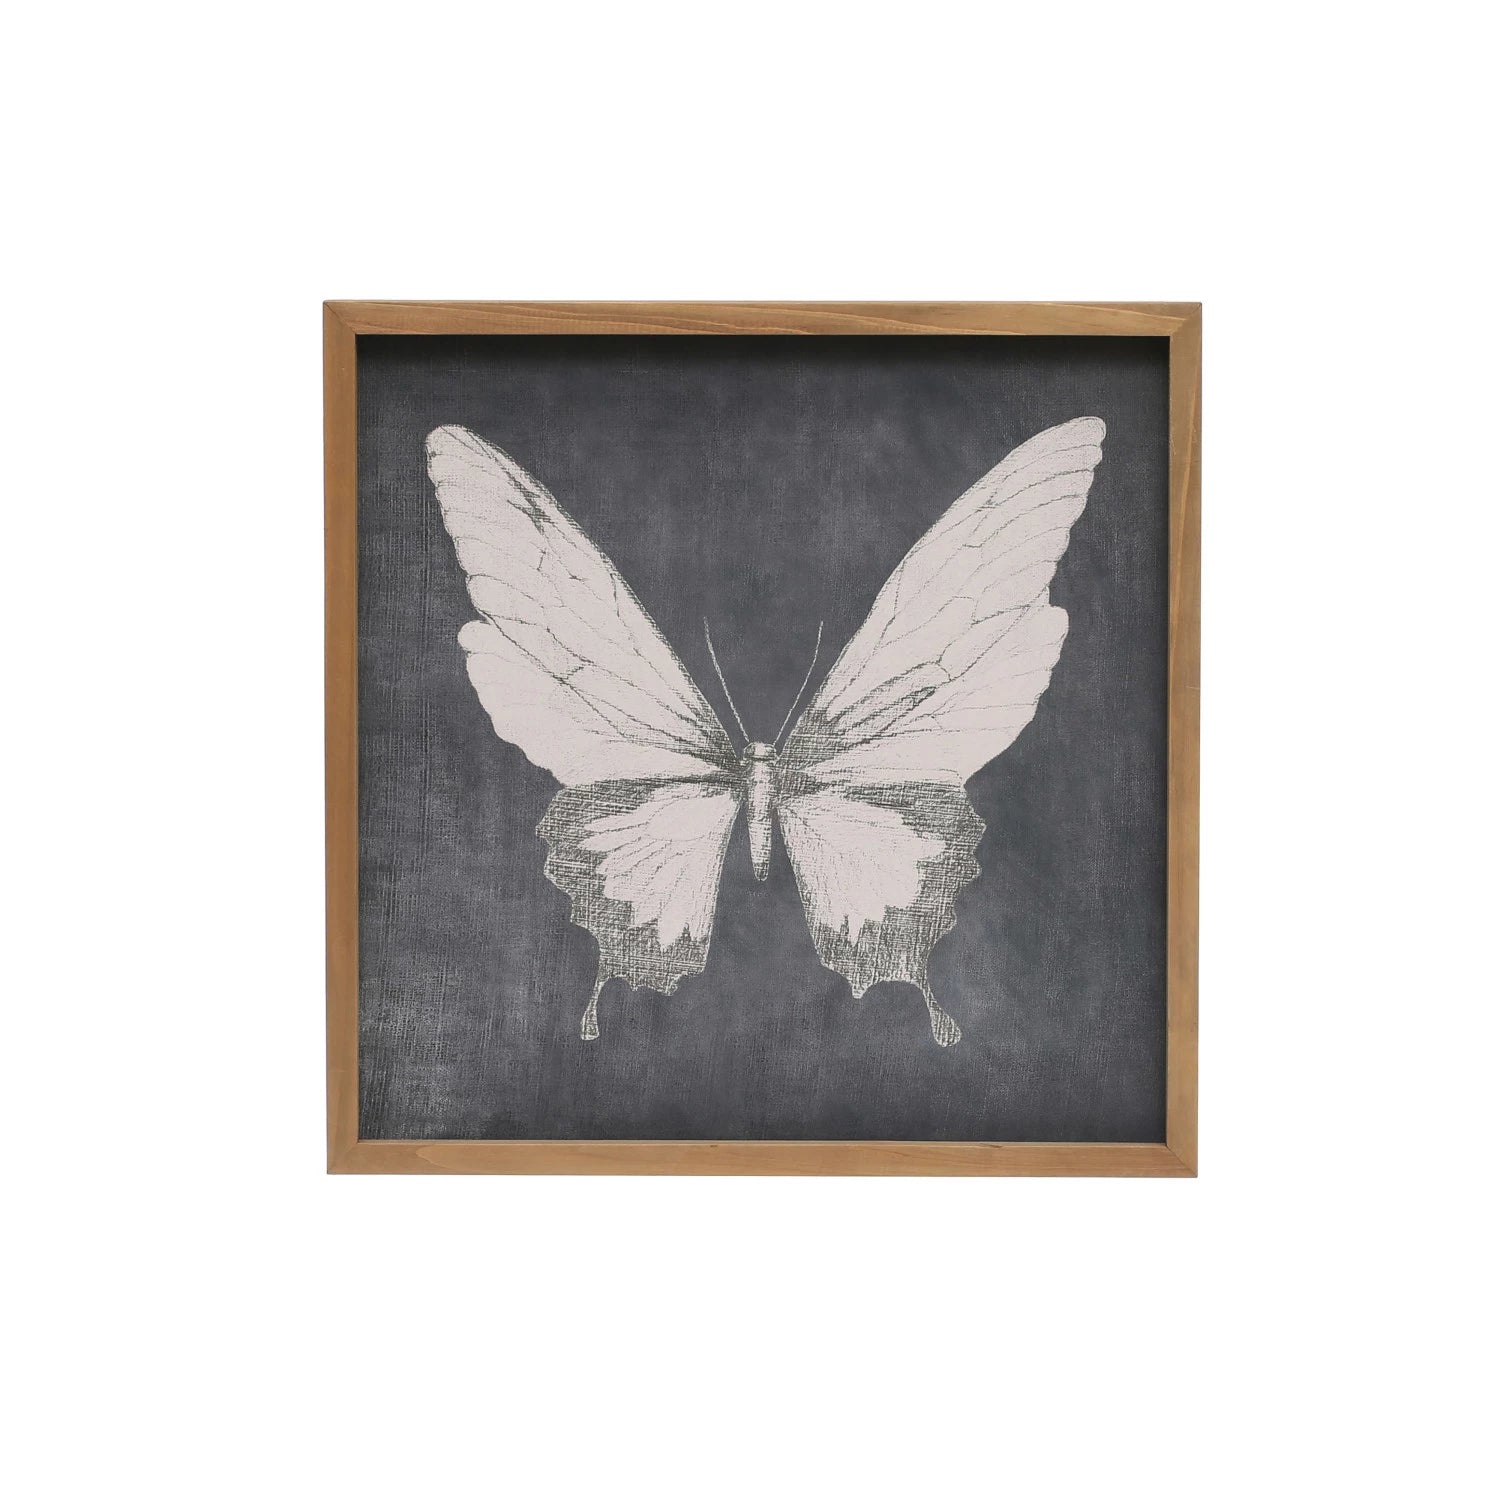 White butterfly on a black chalk-like background in an oak frame.